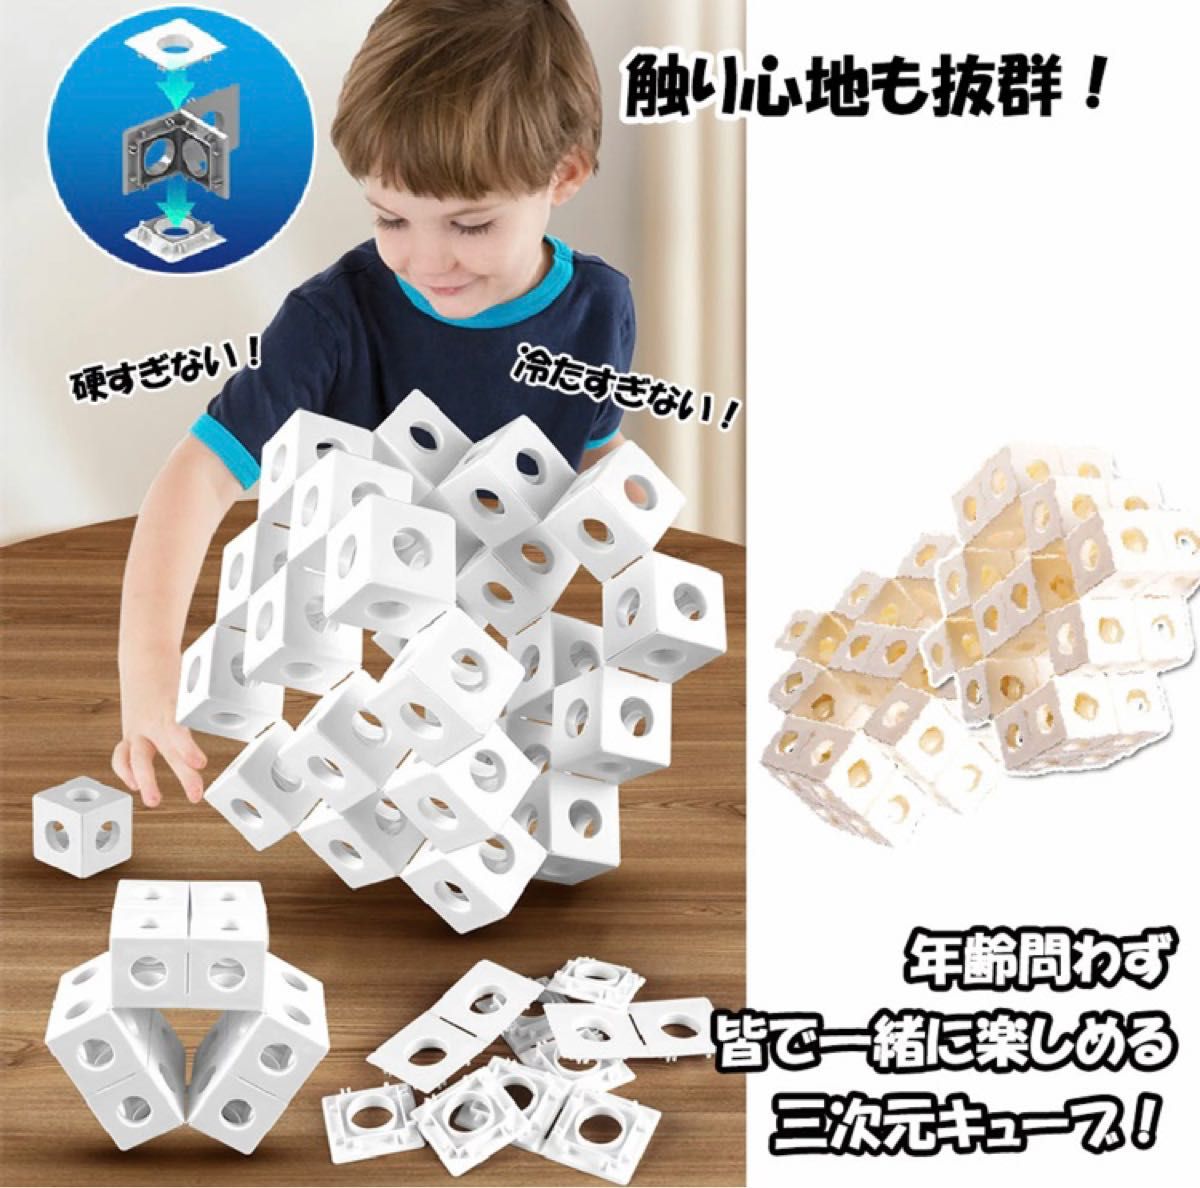 DIY 創造力 魔方 立体パズル リリーフ 立体キューブ 3D パズル ゴーストキューブ マジックキューブ 無限キューブ セール